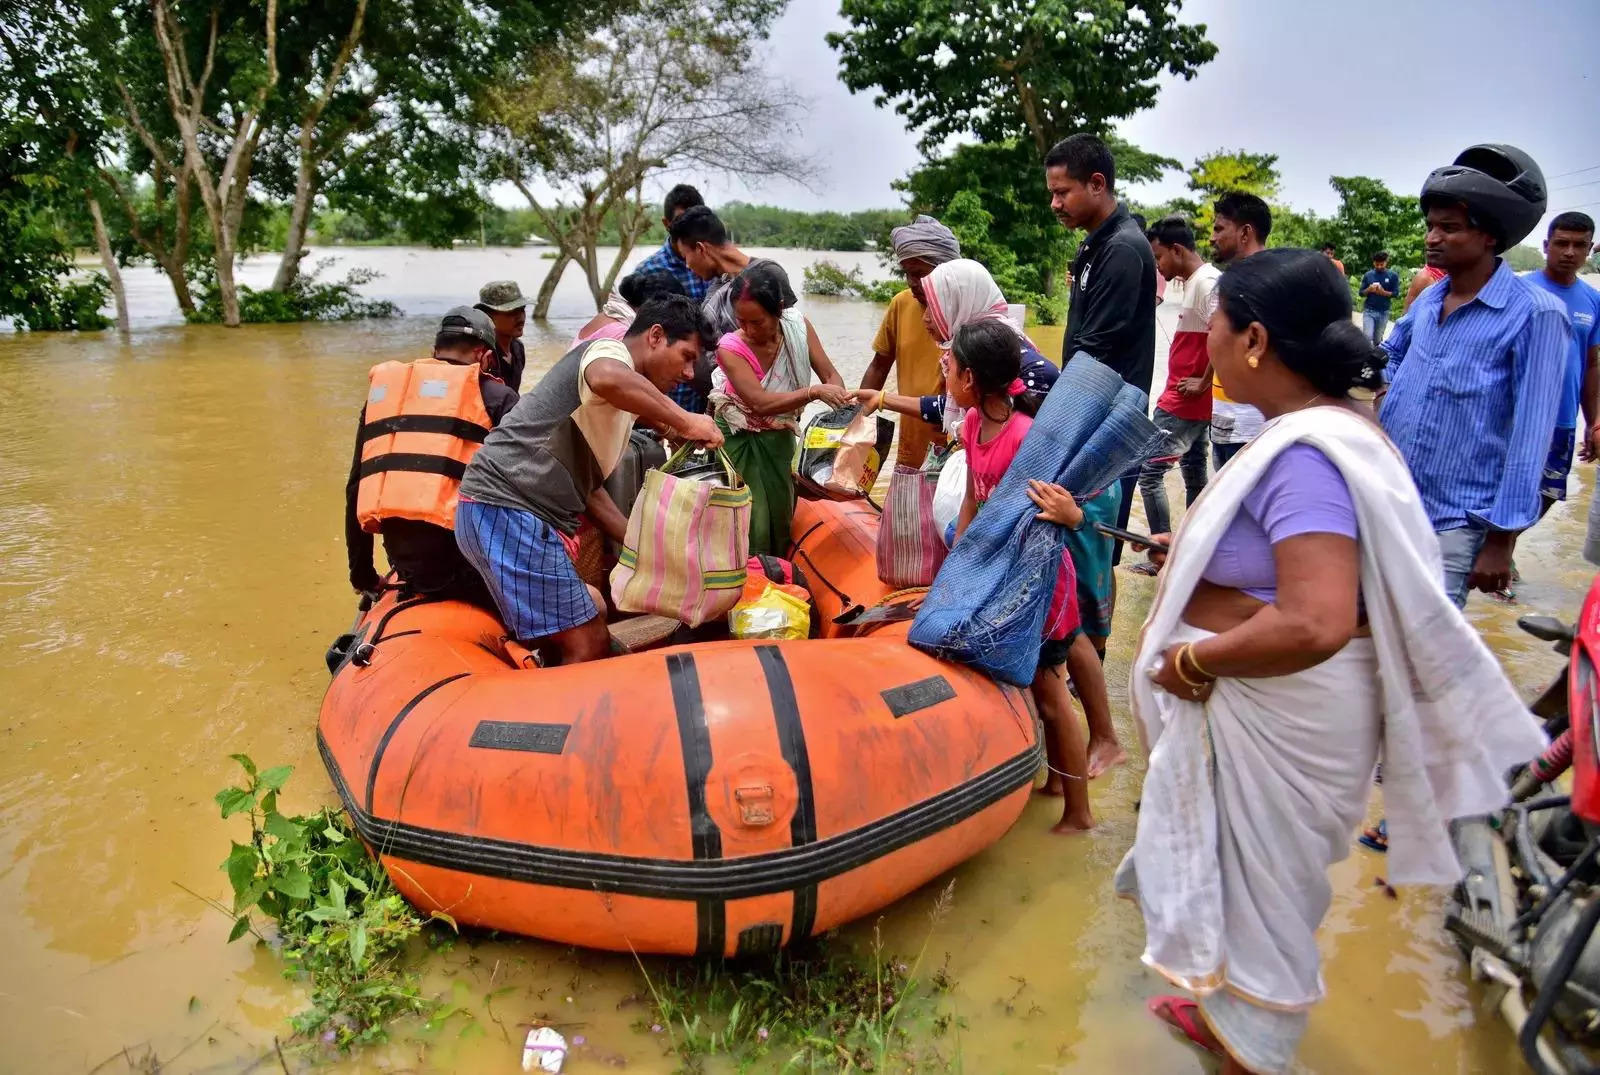 Infra providers seek Assam govt’s support for uninterrupted mobile services amid floods